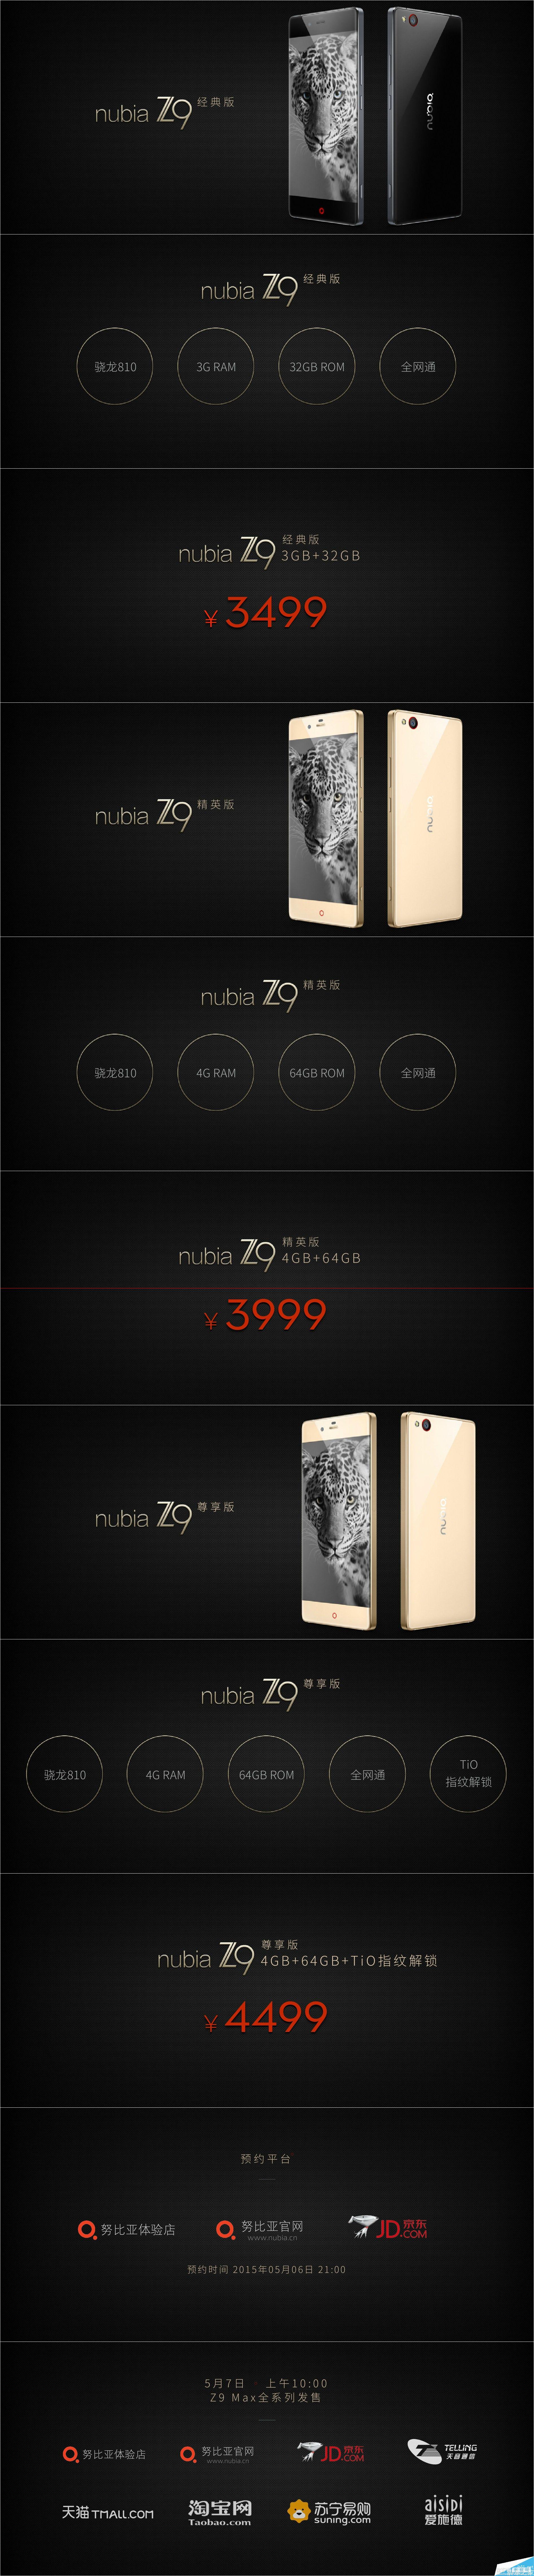 nubia Z9价格公布  经典版/精英版/尊享版售价3499/3999/4499元3